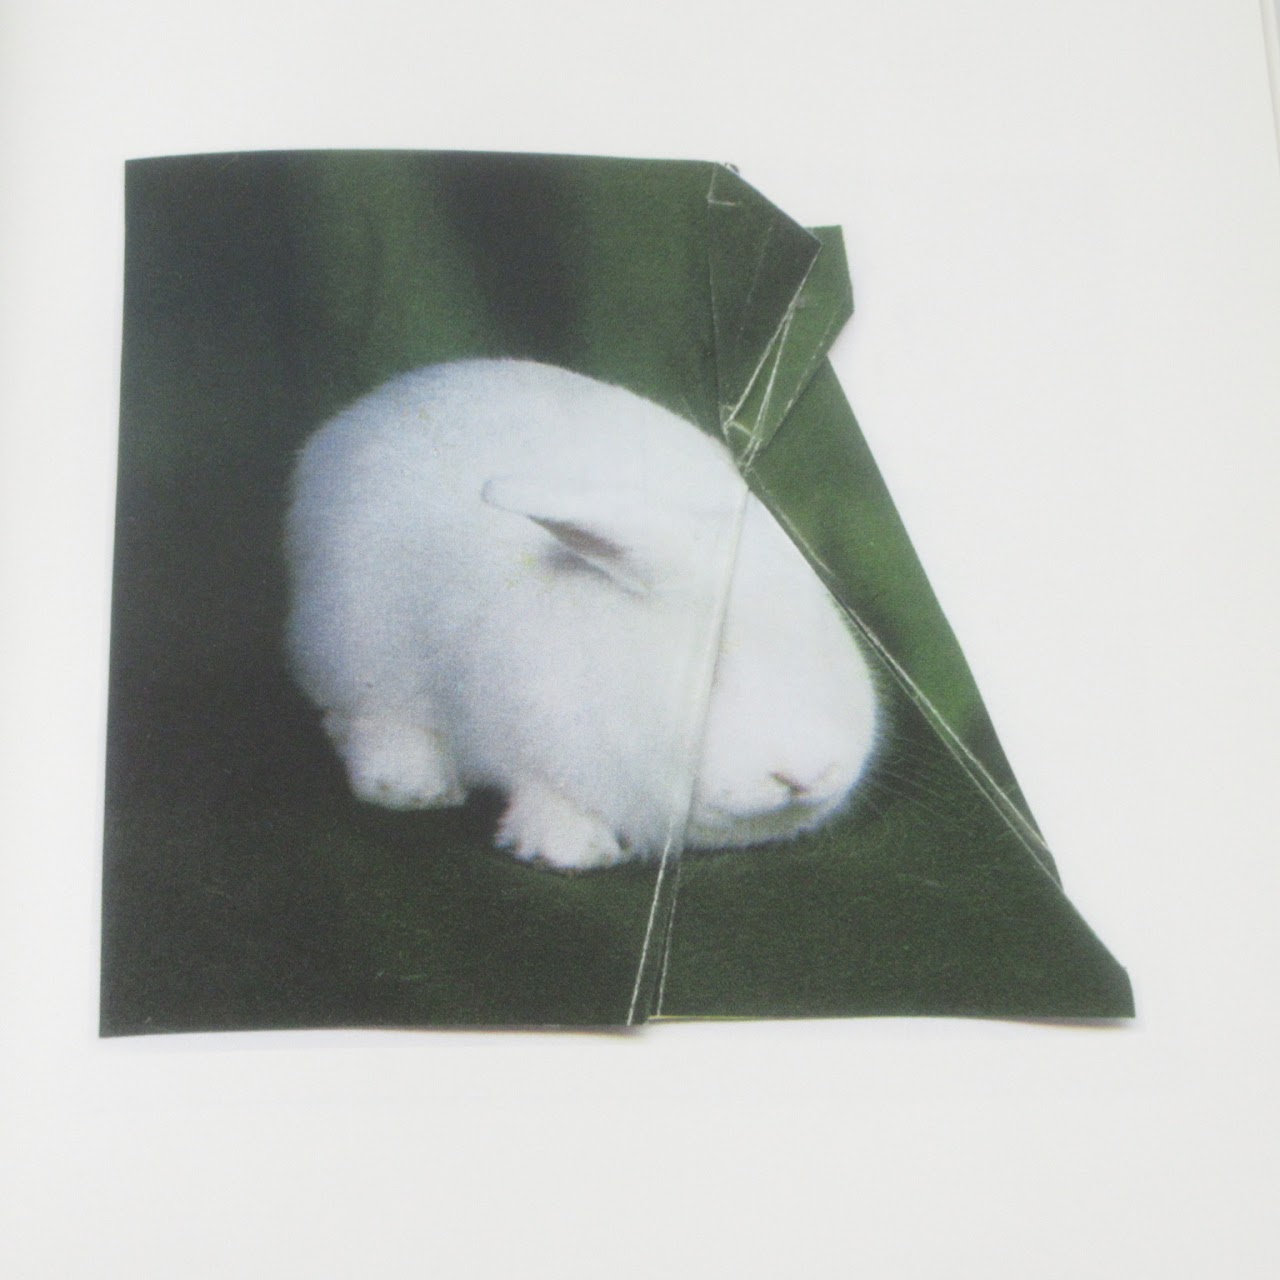 Ruth Van Beek: The Hibernators Photo Essay Book